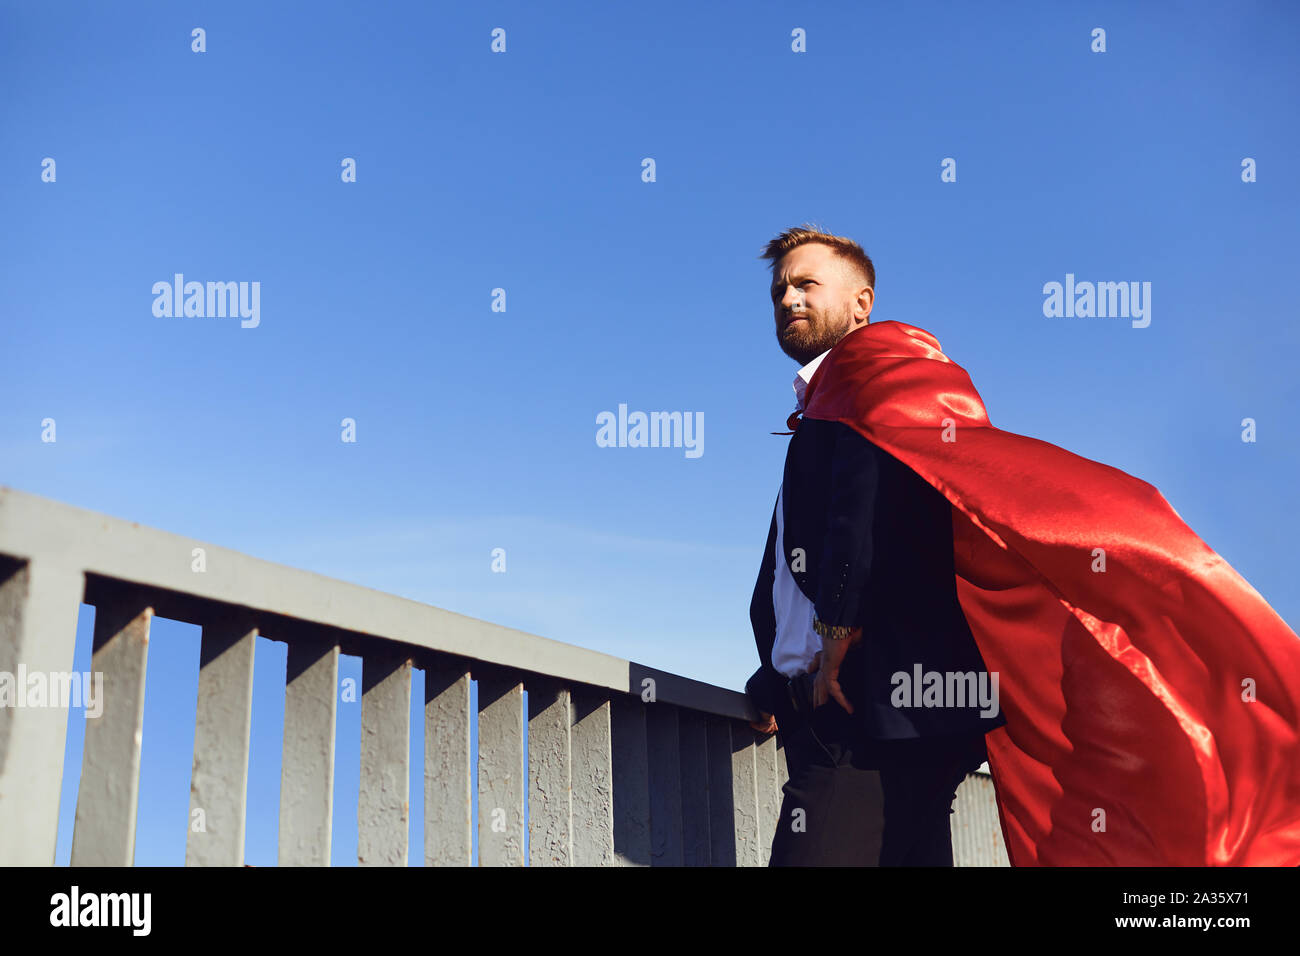 Successful superhero businessman on a background of blue sky Stock Photo